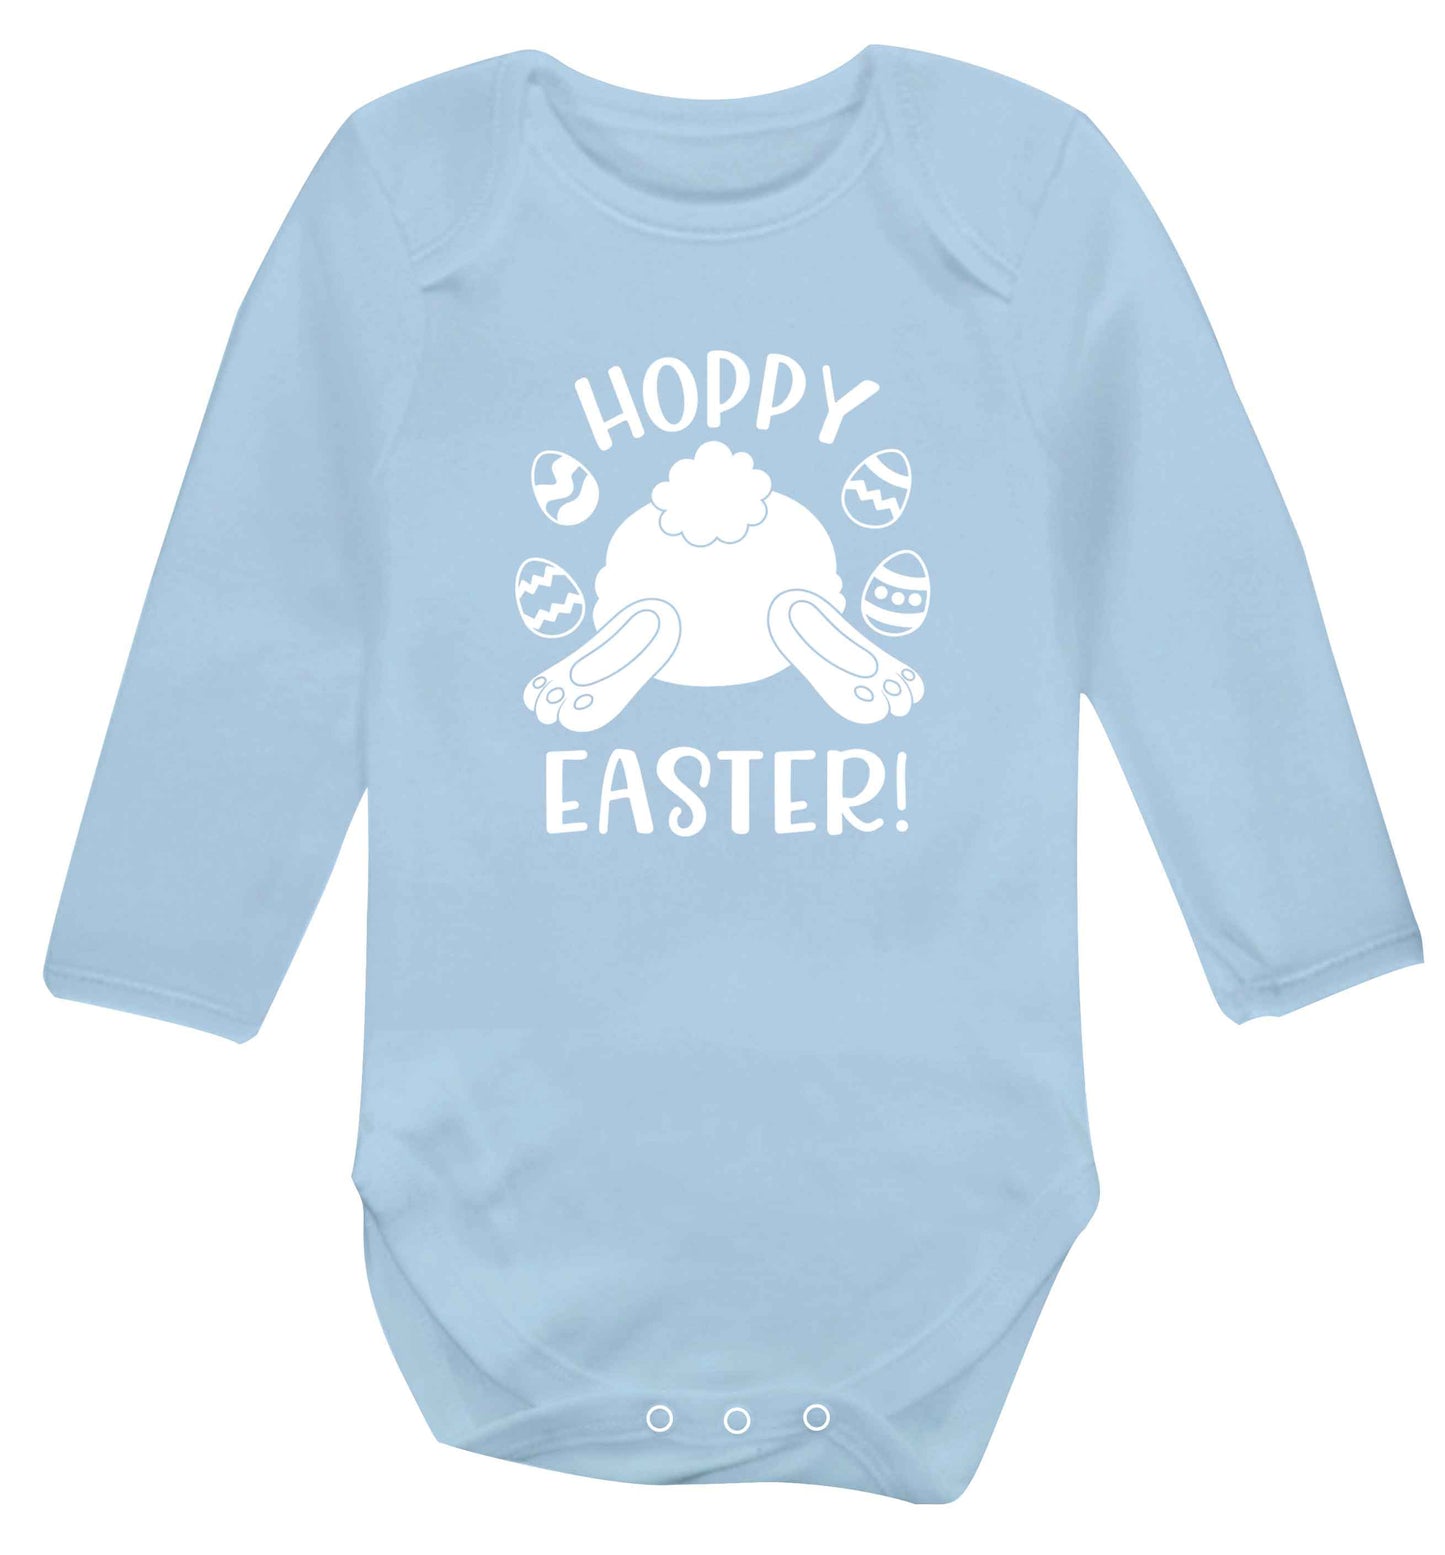 Hoppy Easter baby vest long sleeved pale blue 6-12 months